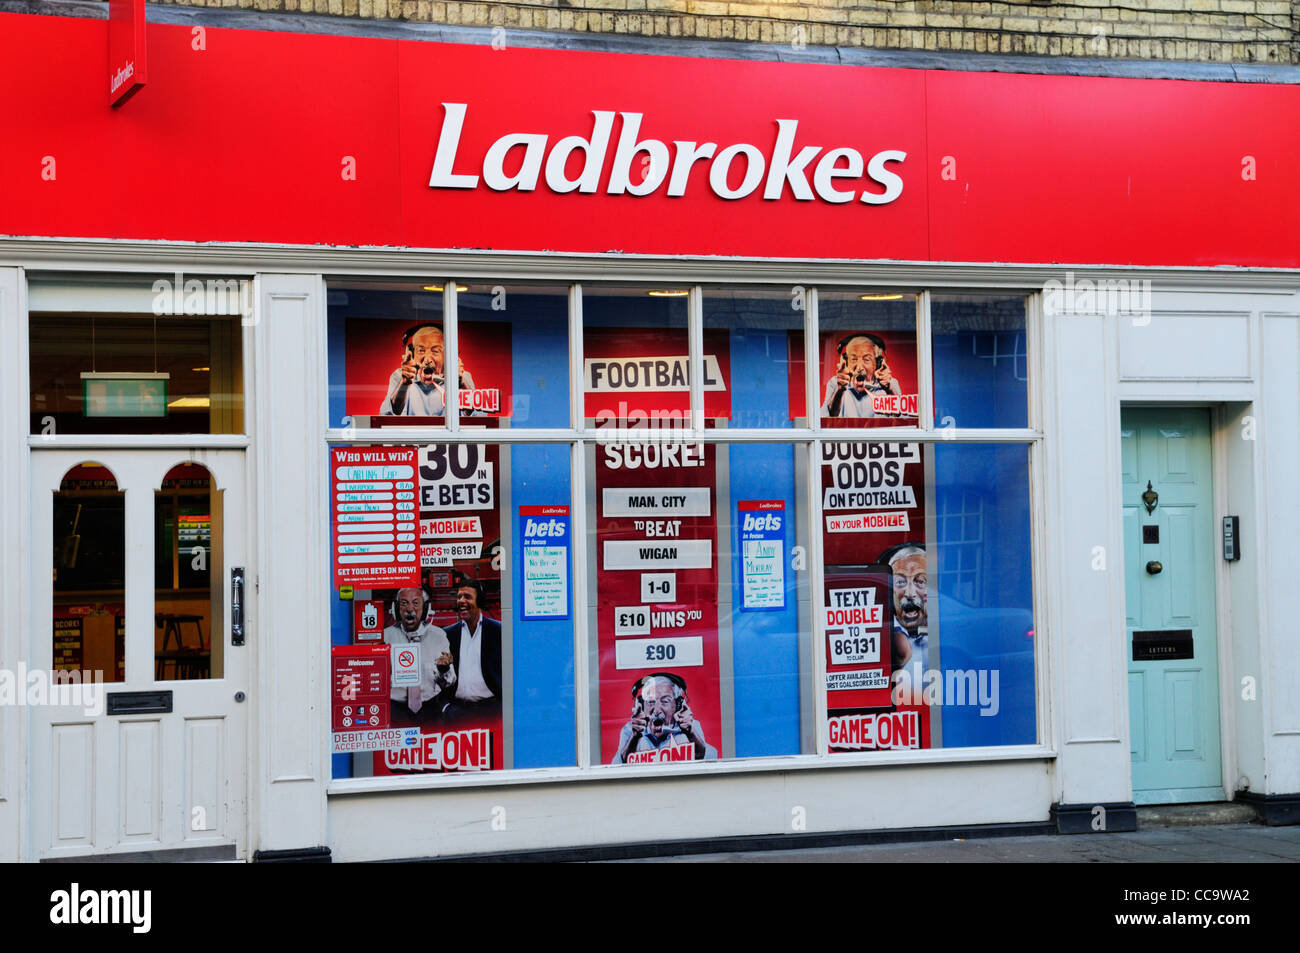 Ladbrokes Betting Shop, Cambridge, England, UK Stock Photo